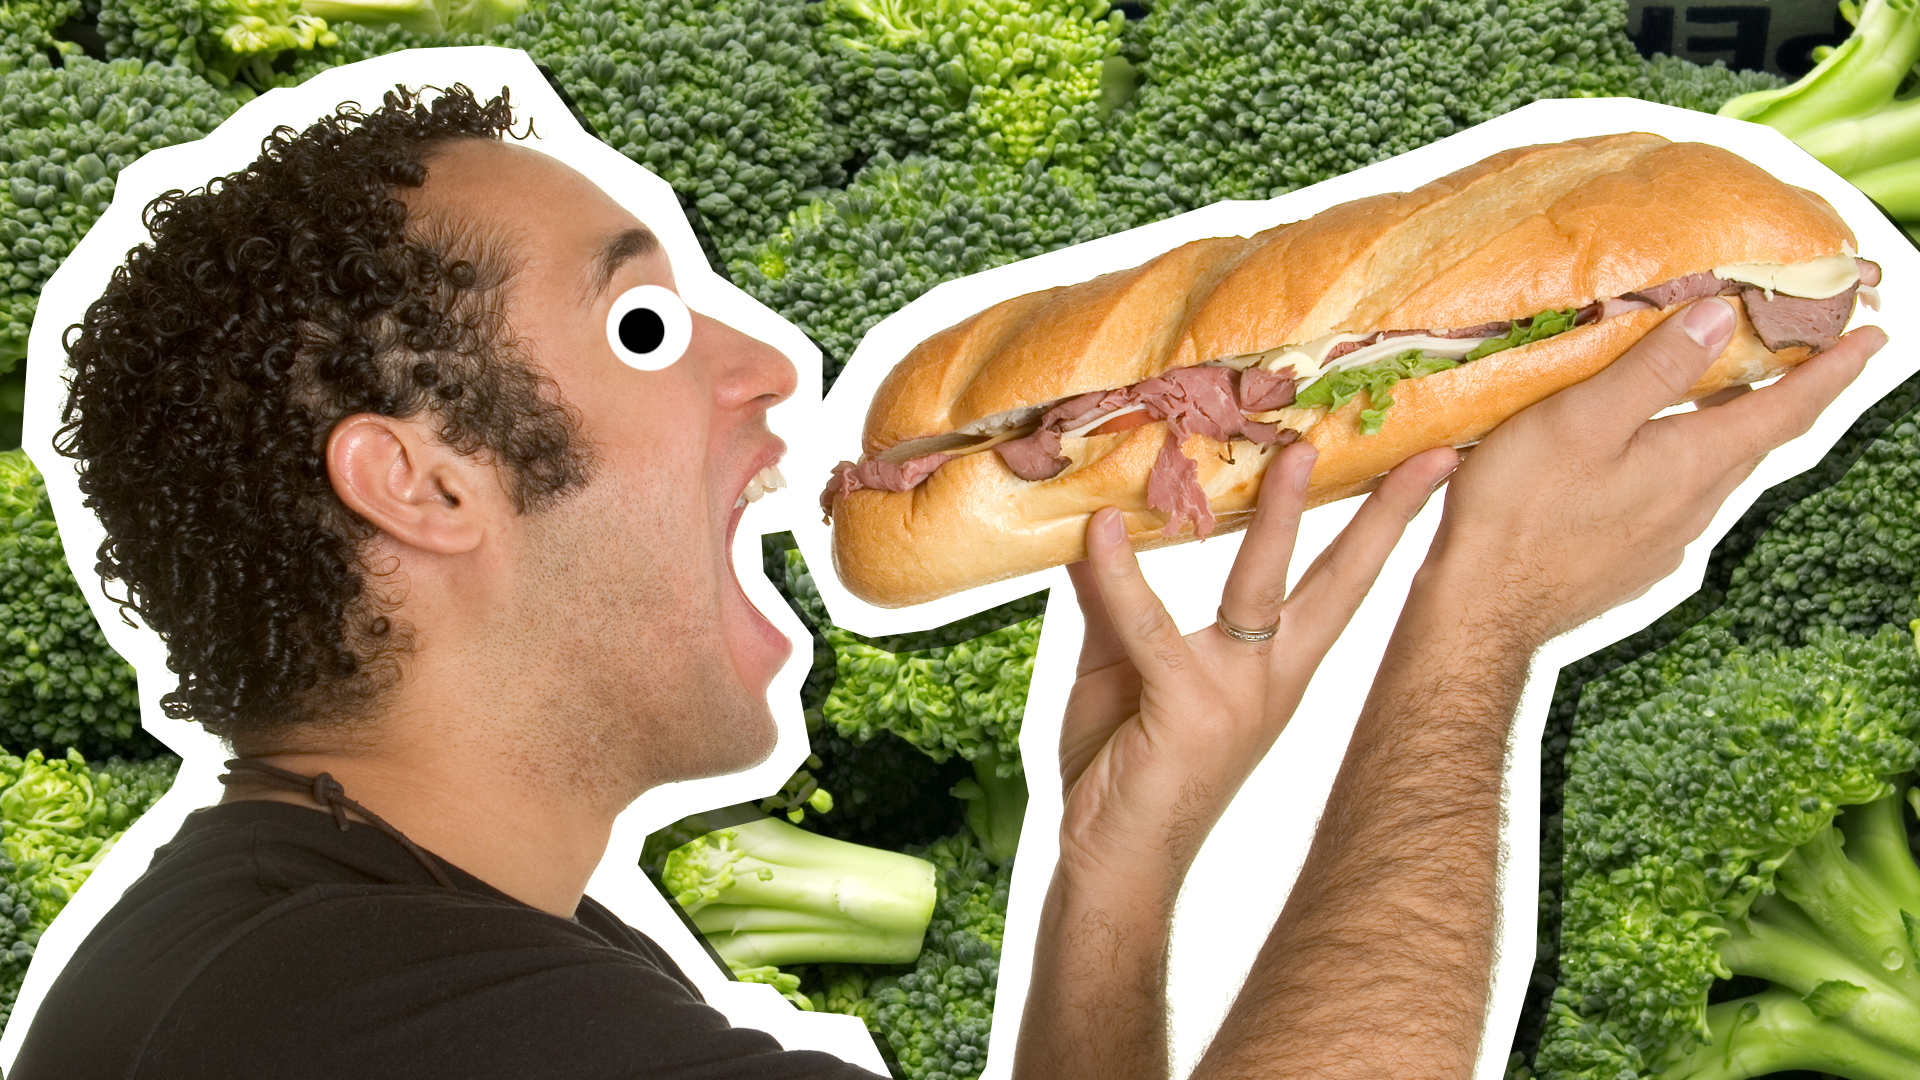 A man eating a massive sandwich